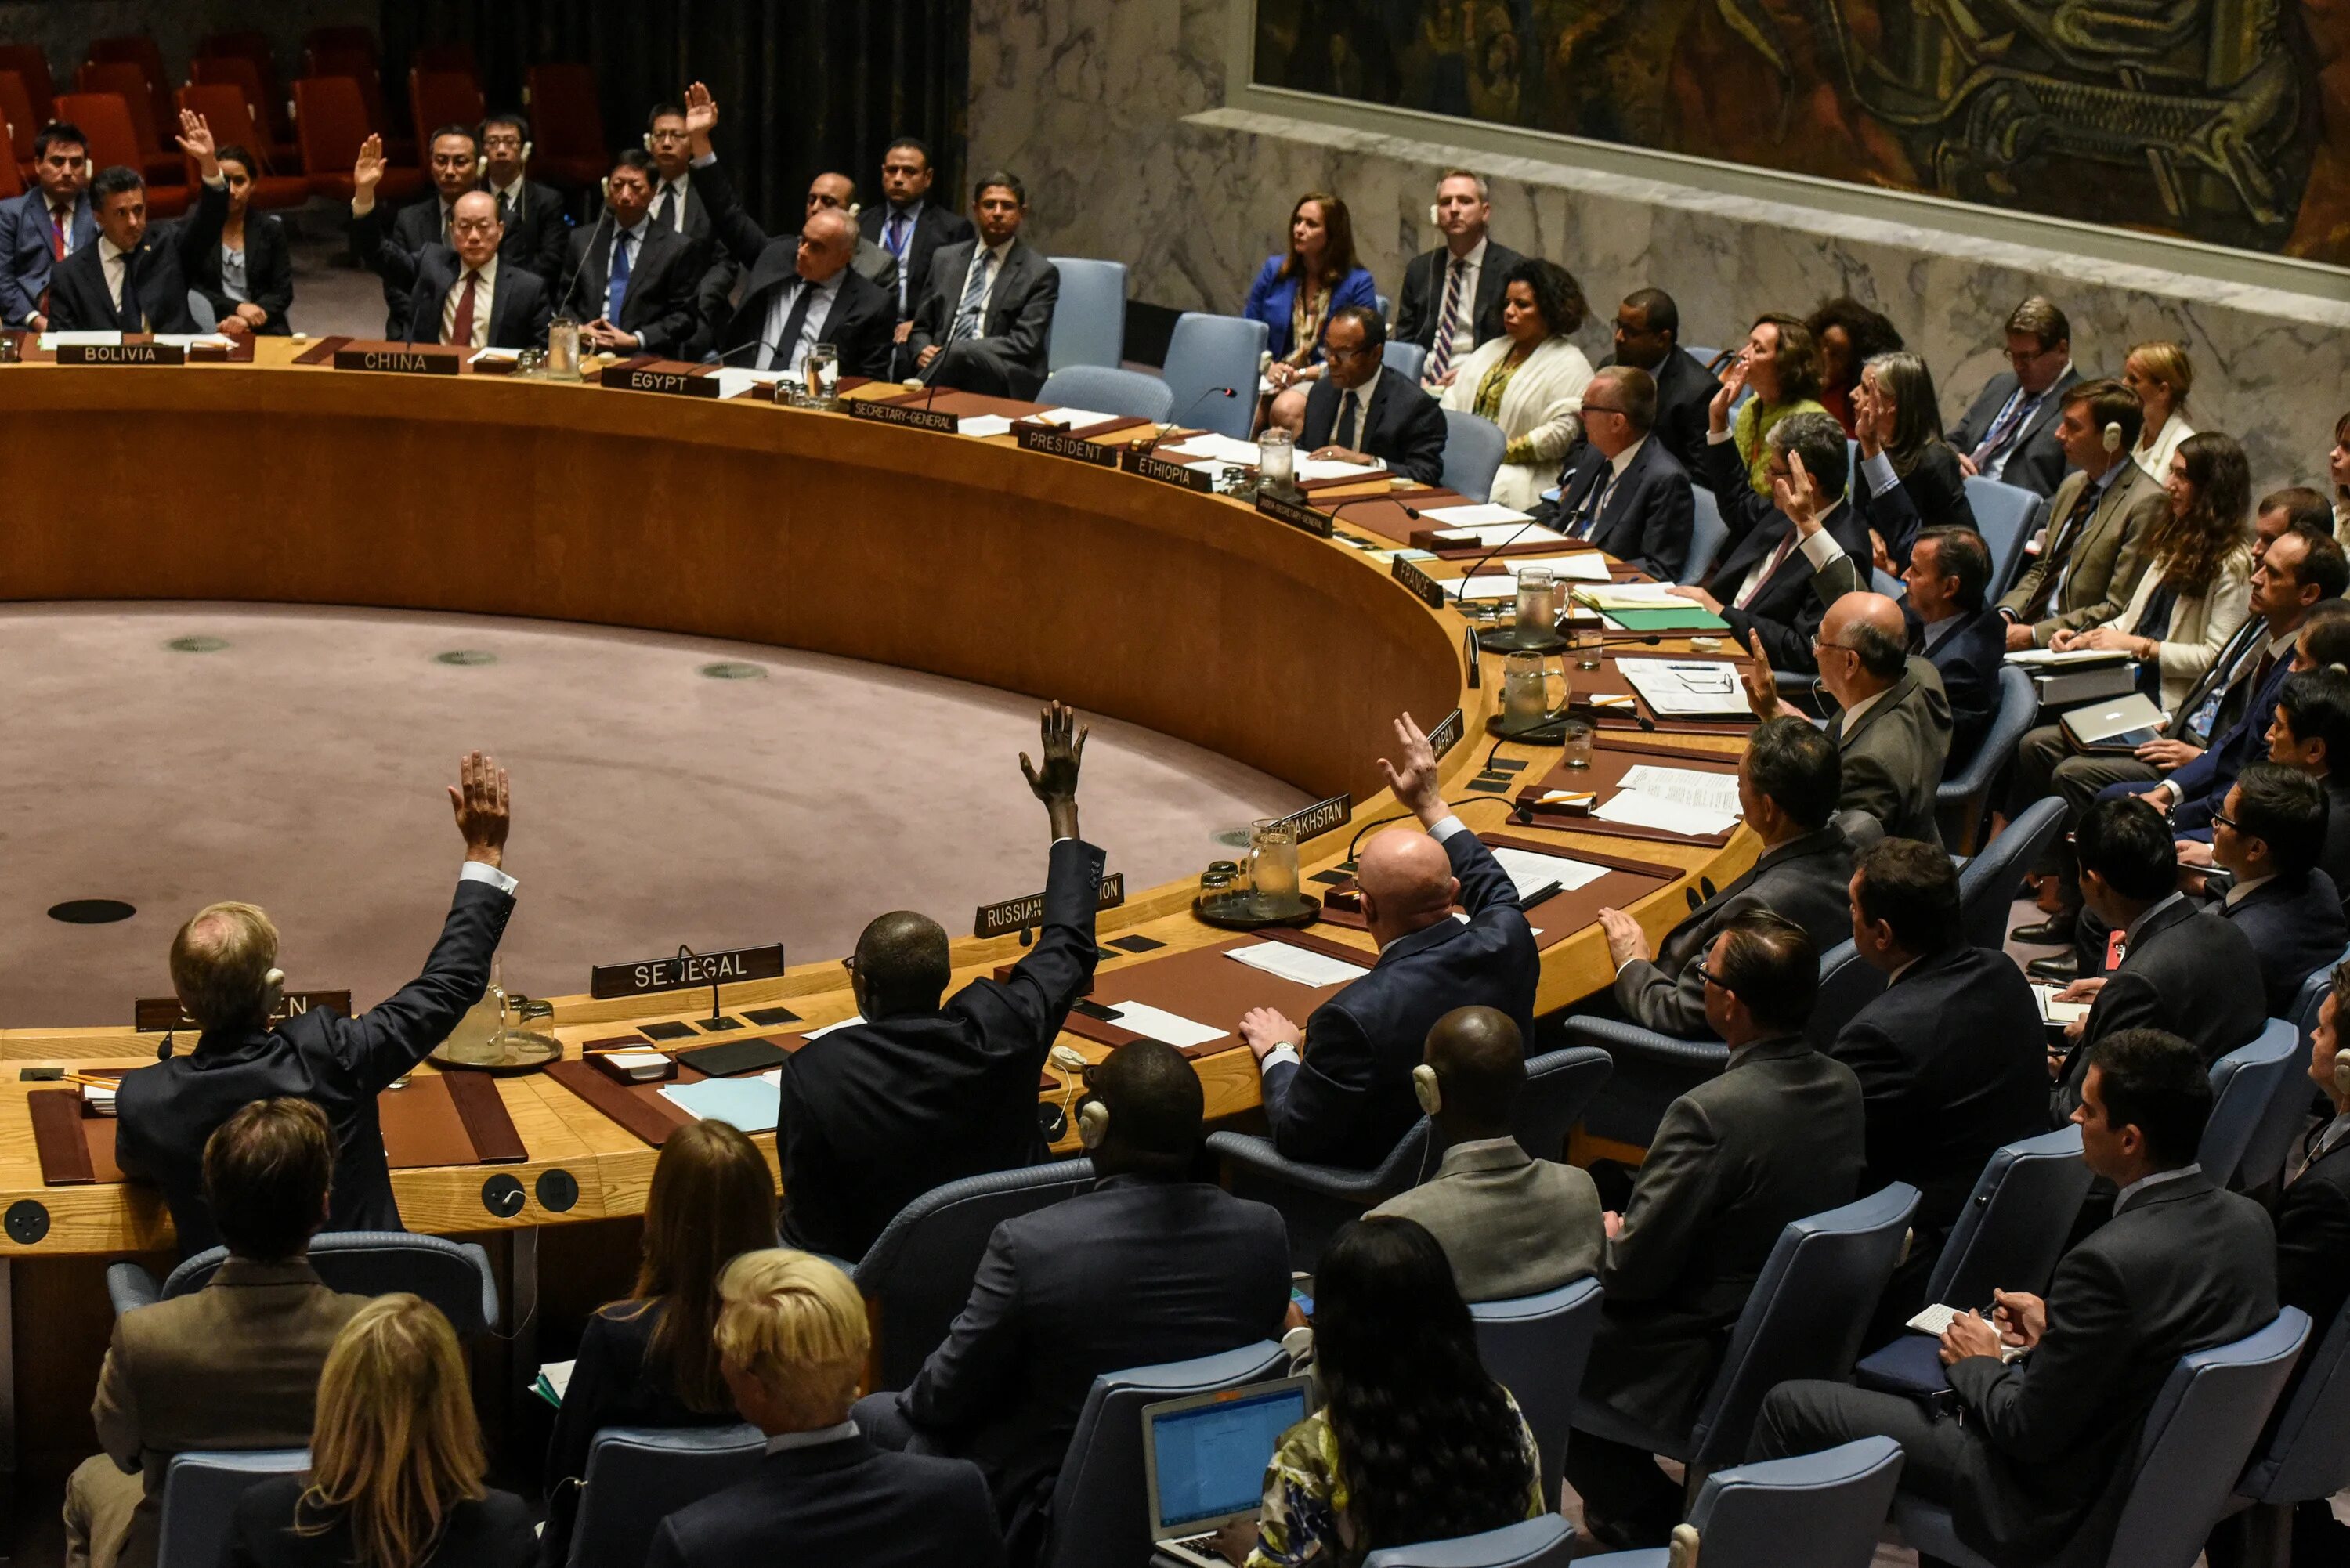 Совбез ООН. Сб ООН. Заседание совета безопасности ООН. Совбез ООН Россия. Оон 2017